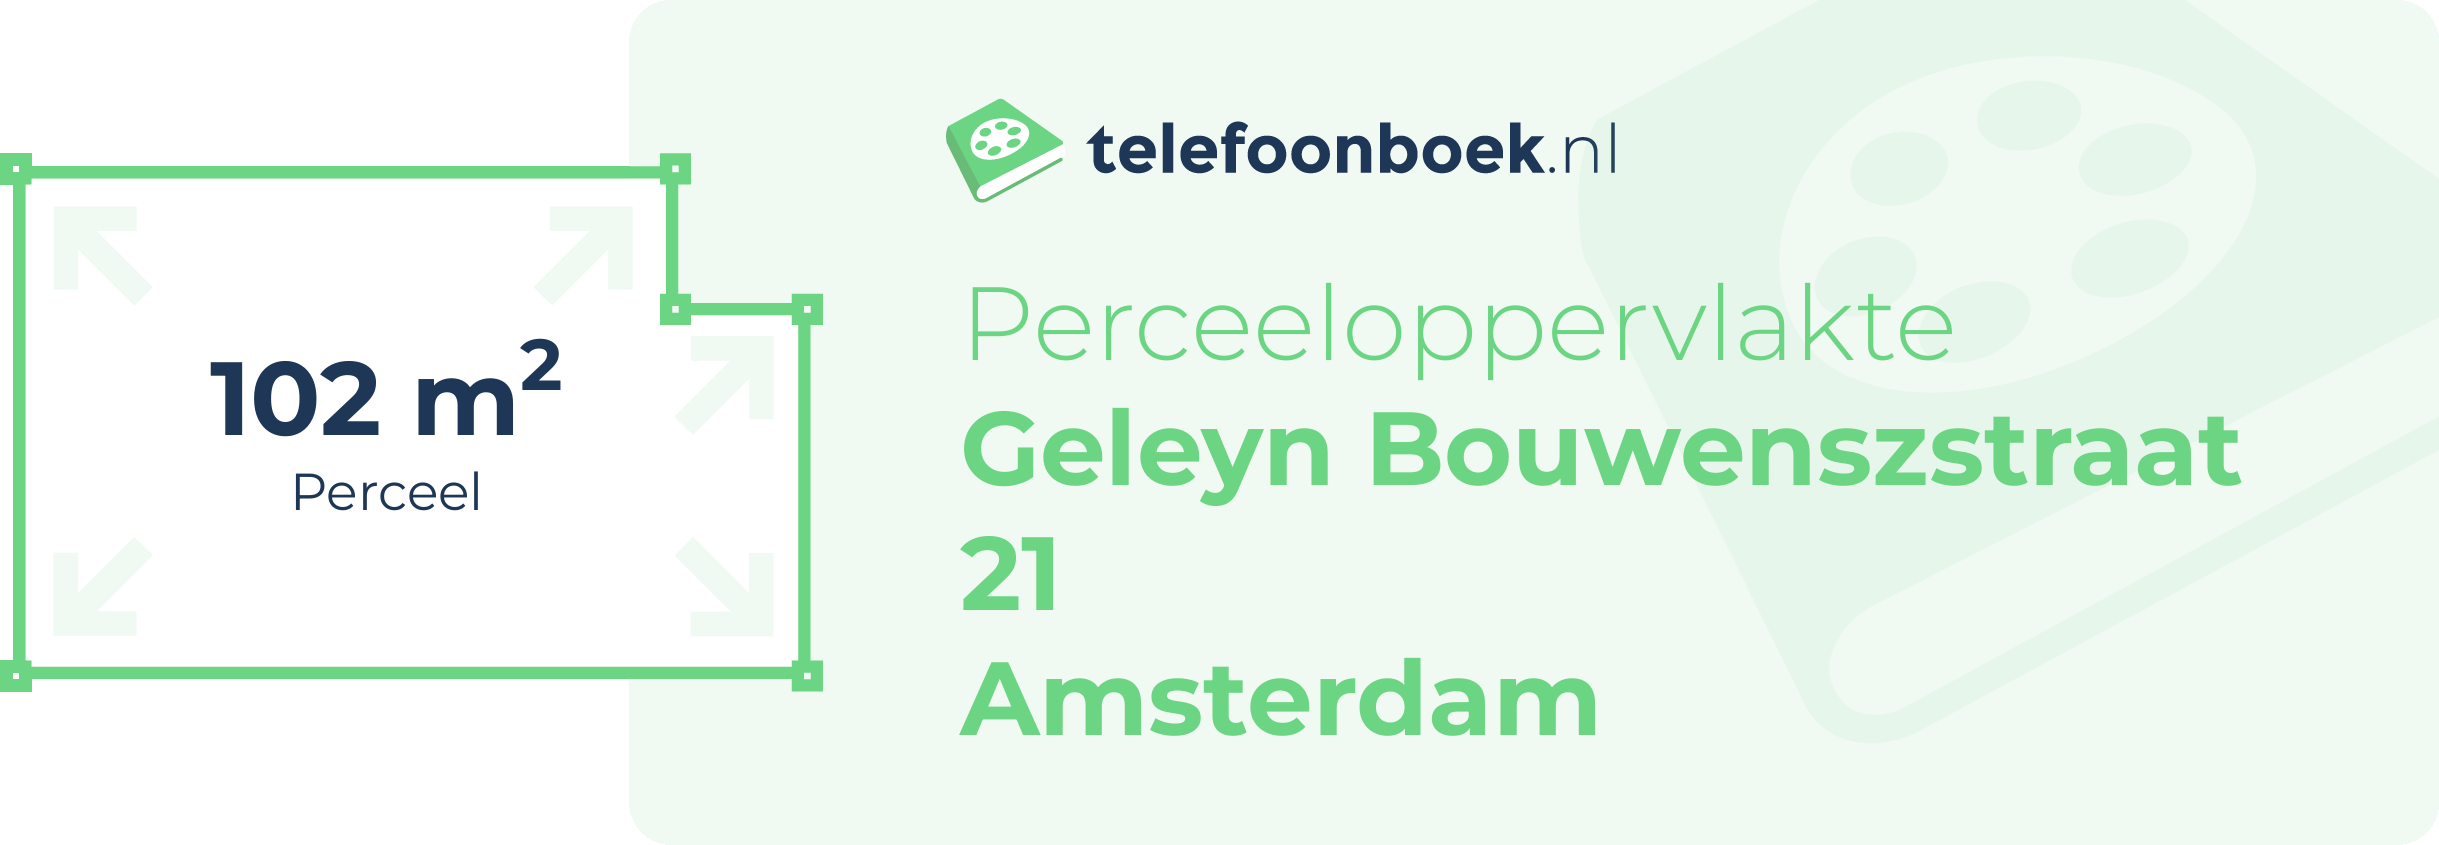 Perceeloppervlakte Geleyn Bouwenszstraat 21 Amsterdam